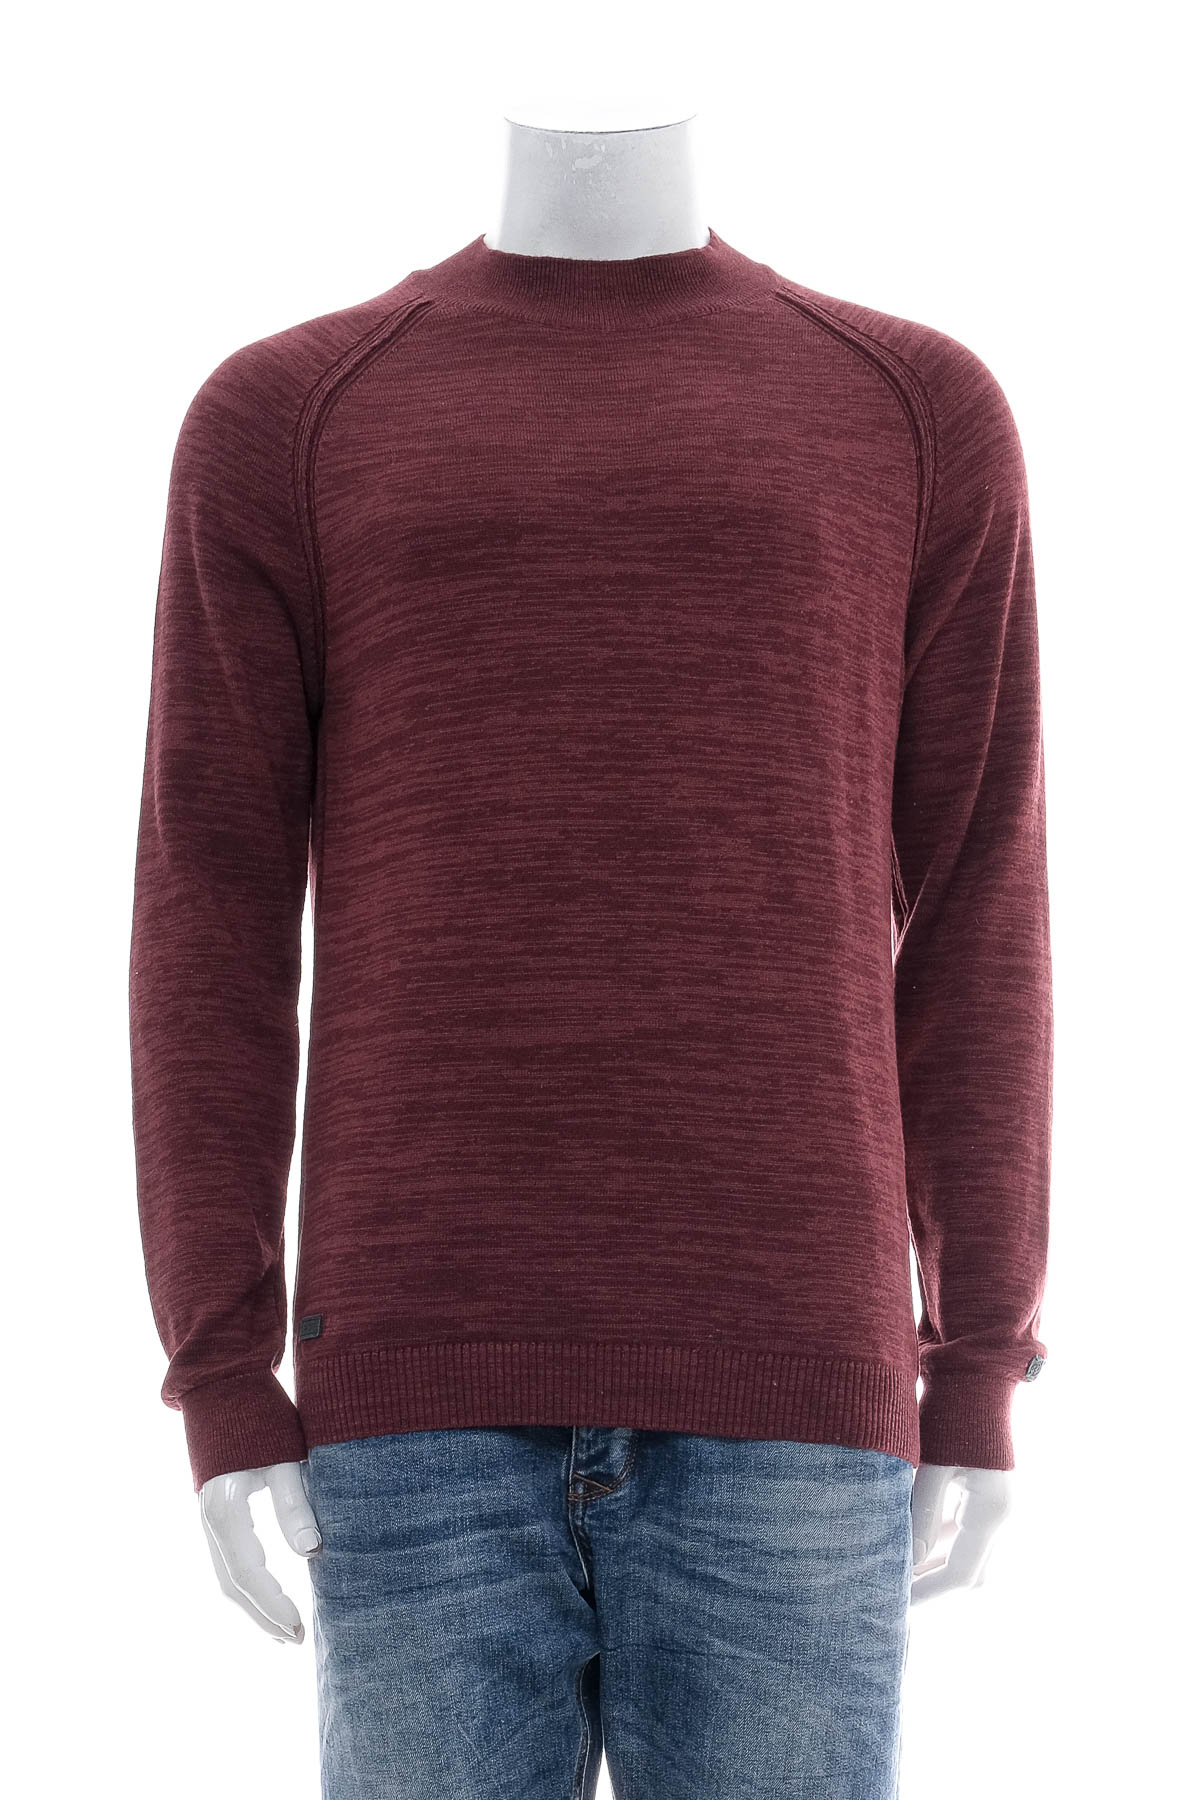 Men's sweater - Cast Iron - 0